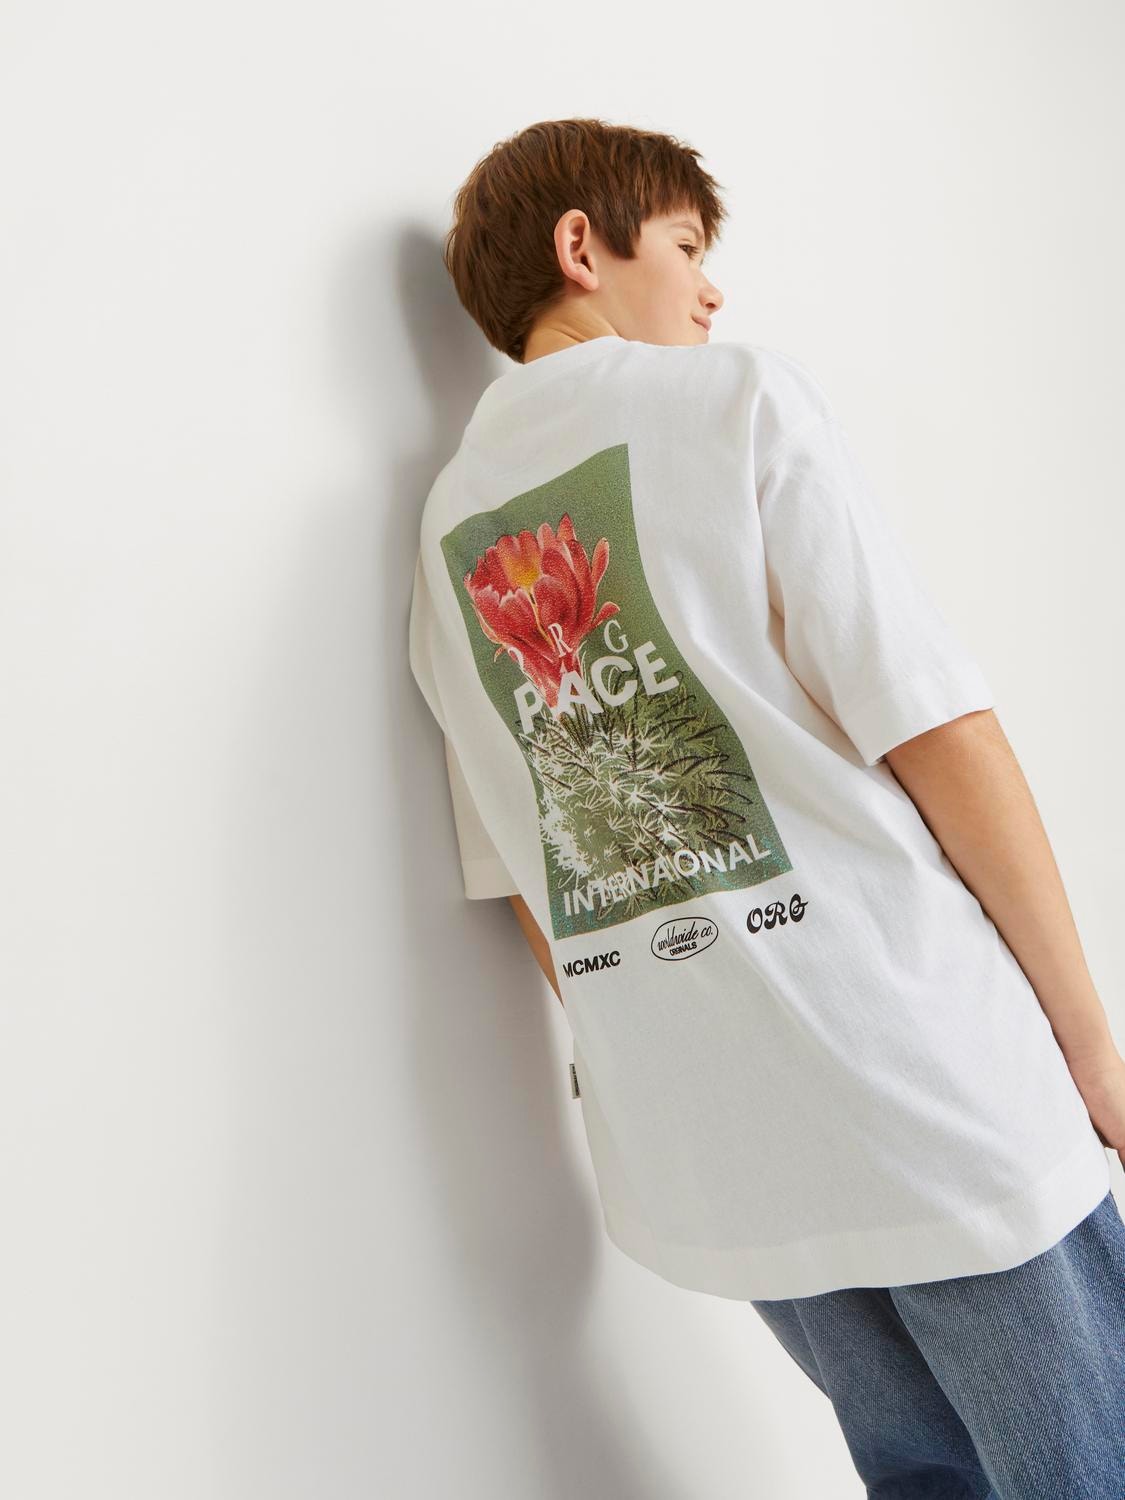 Jack & Jones Printed T-shirt For boys -Bright White - 12253986